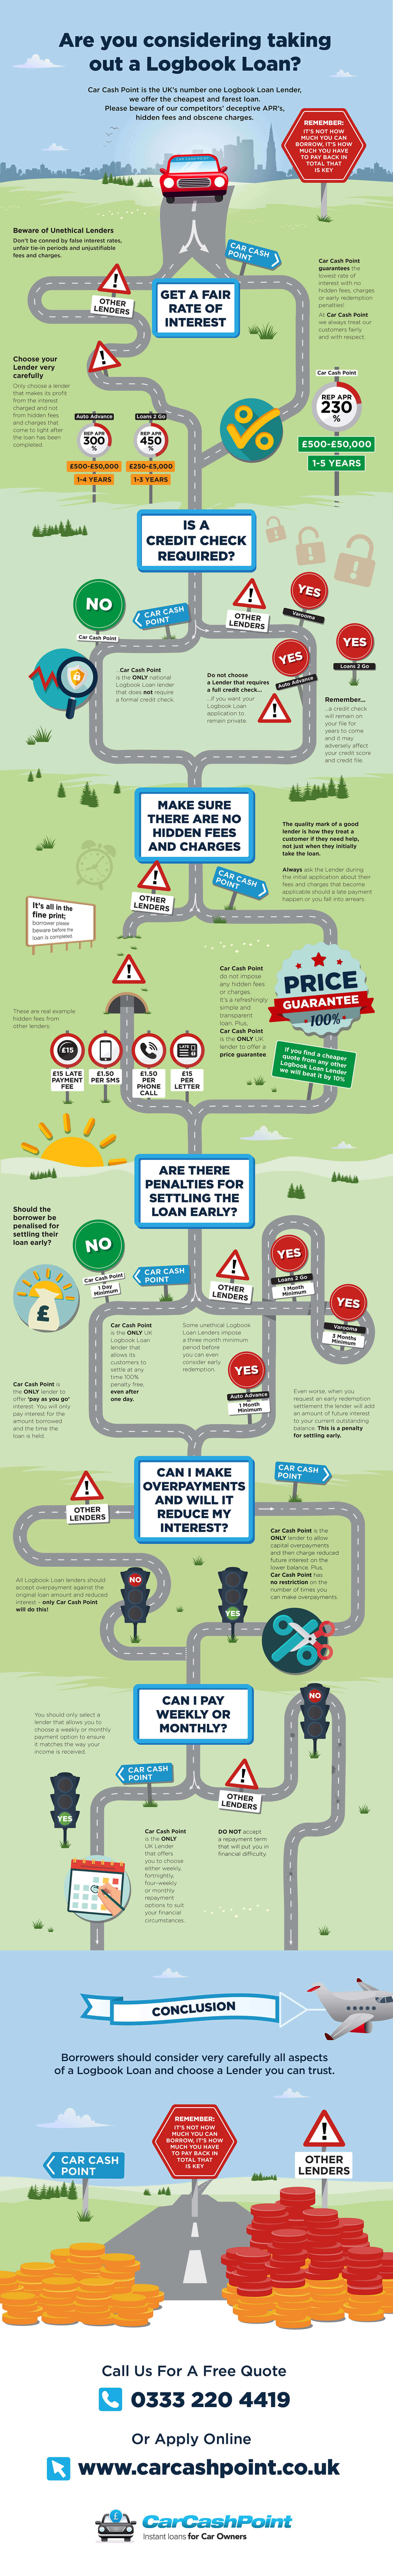 Logbook Loan Comparison